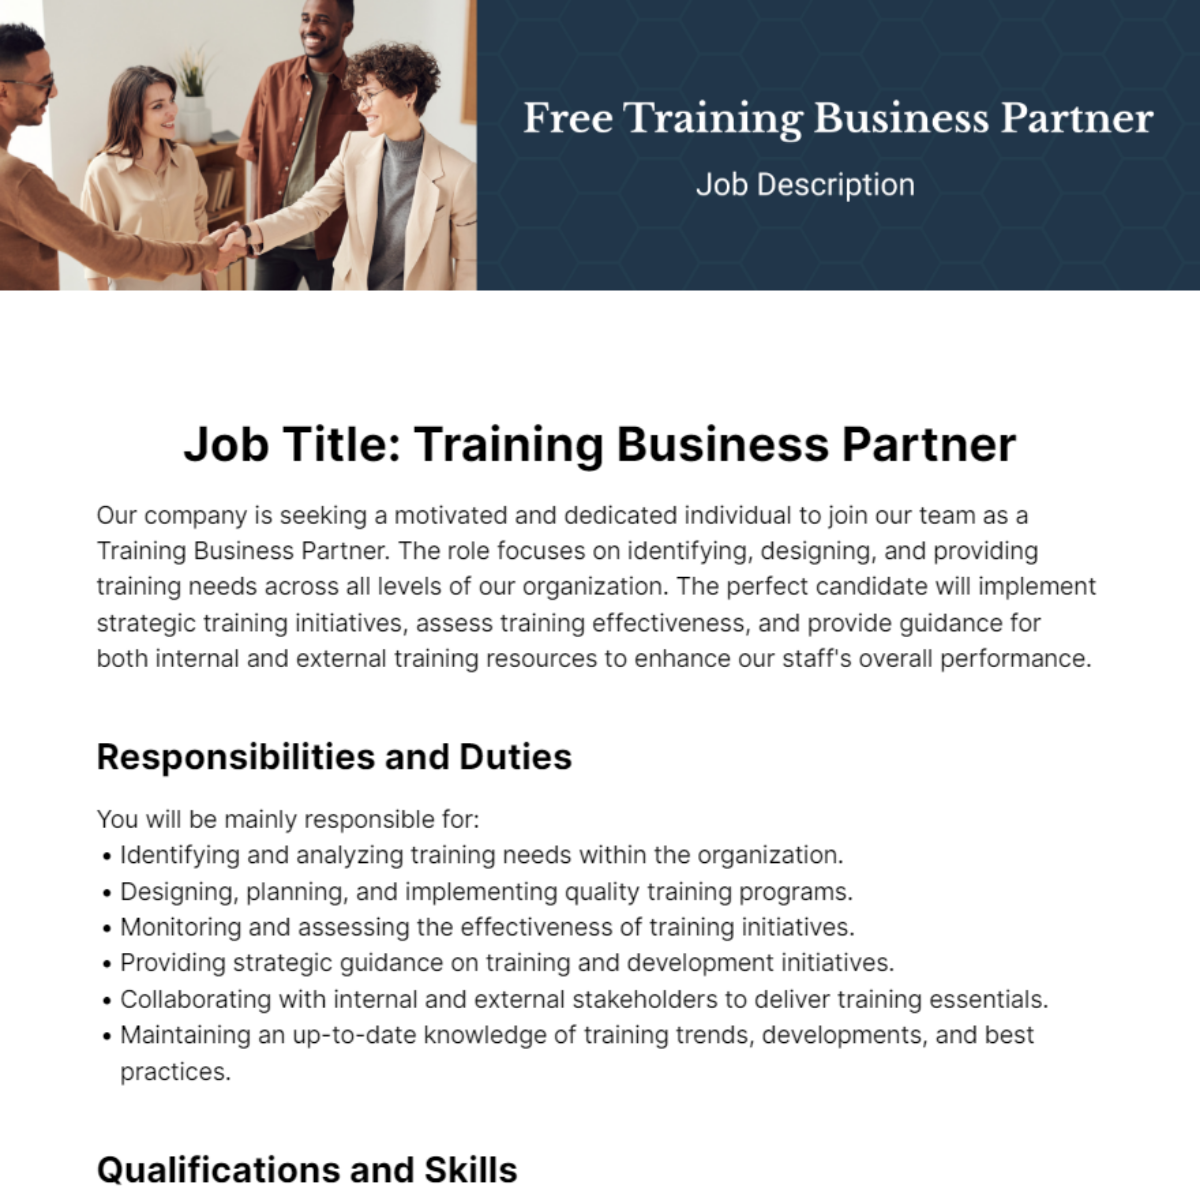 Free Training Business Partner Job Description Template